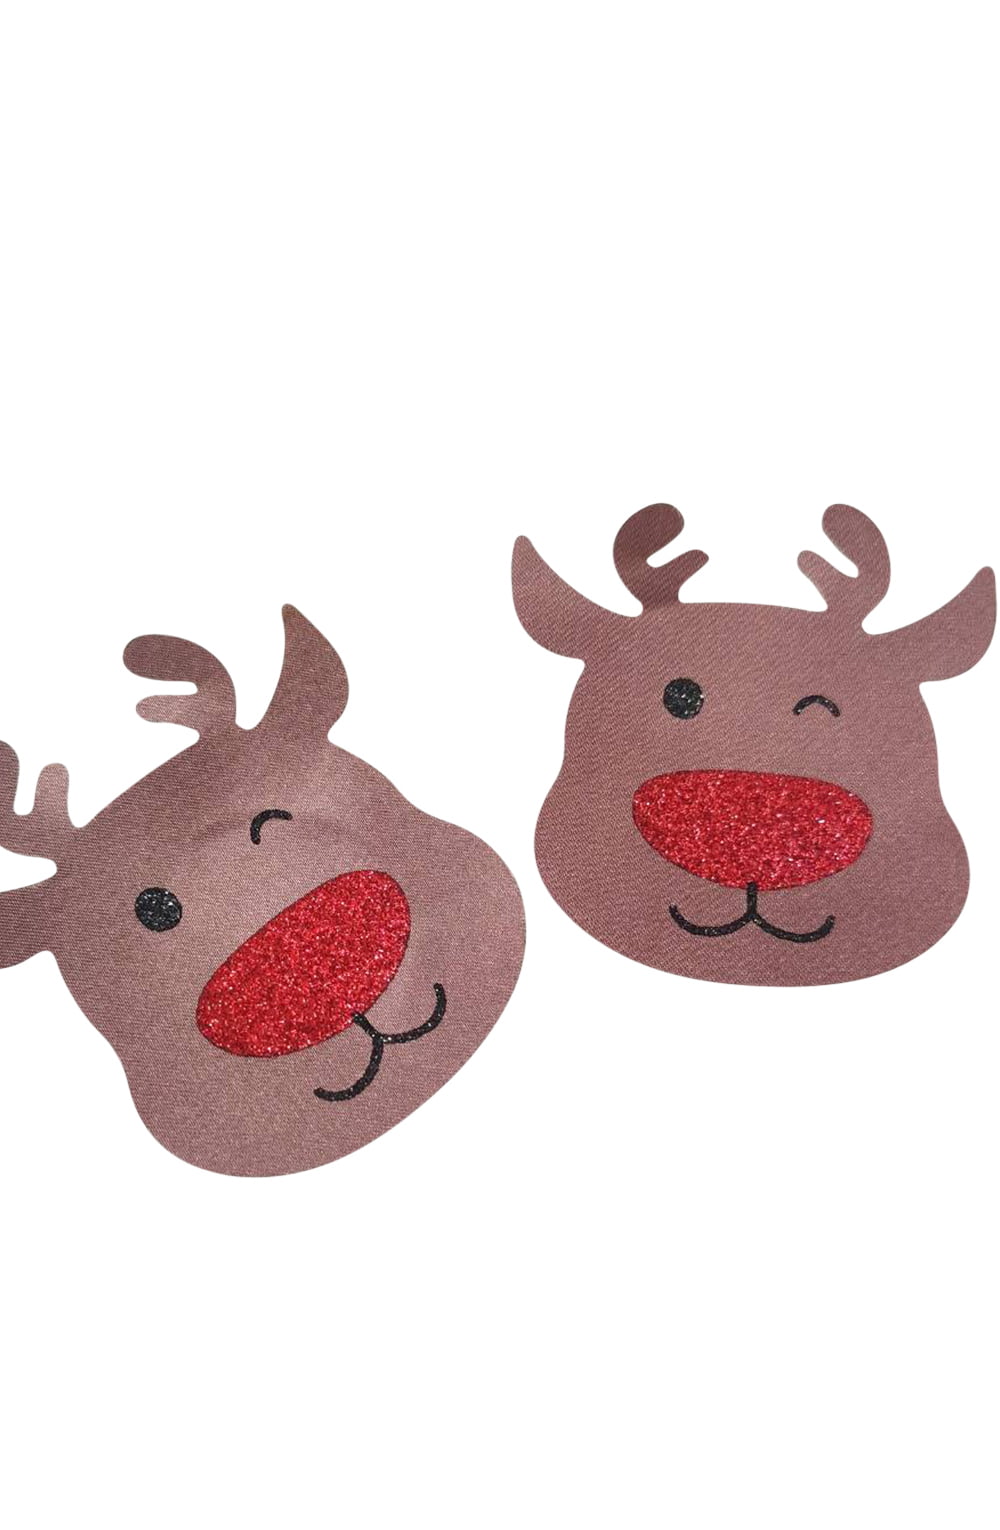 YesX YX960 Brown/Red Reindeer Nipple Covers - Festive Christmas Accessories